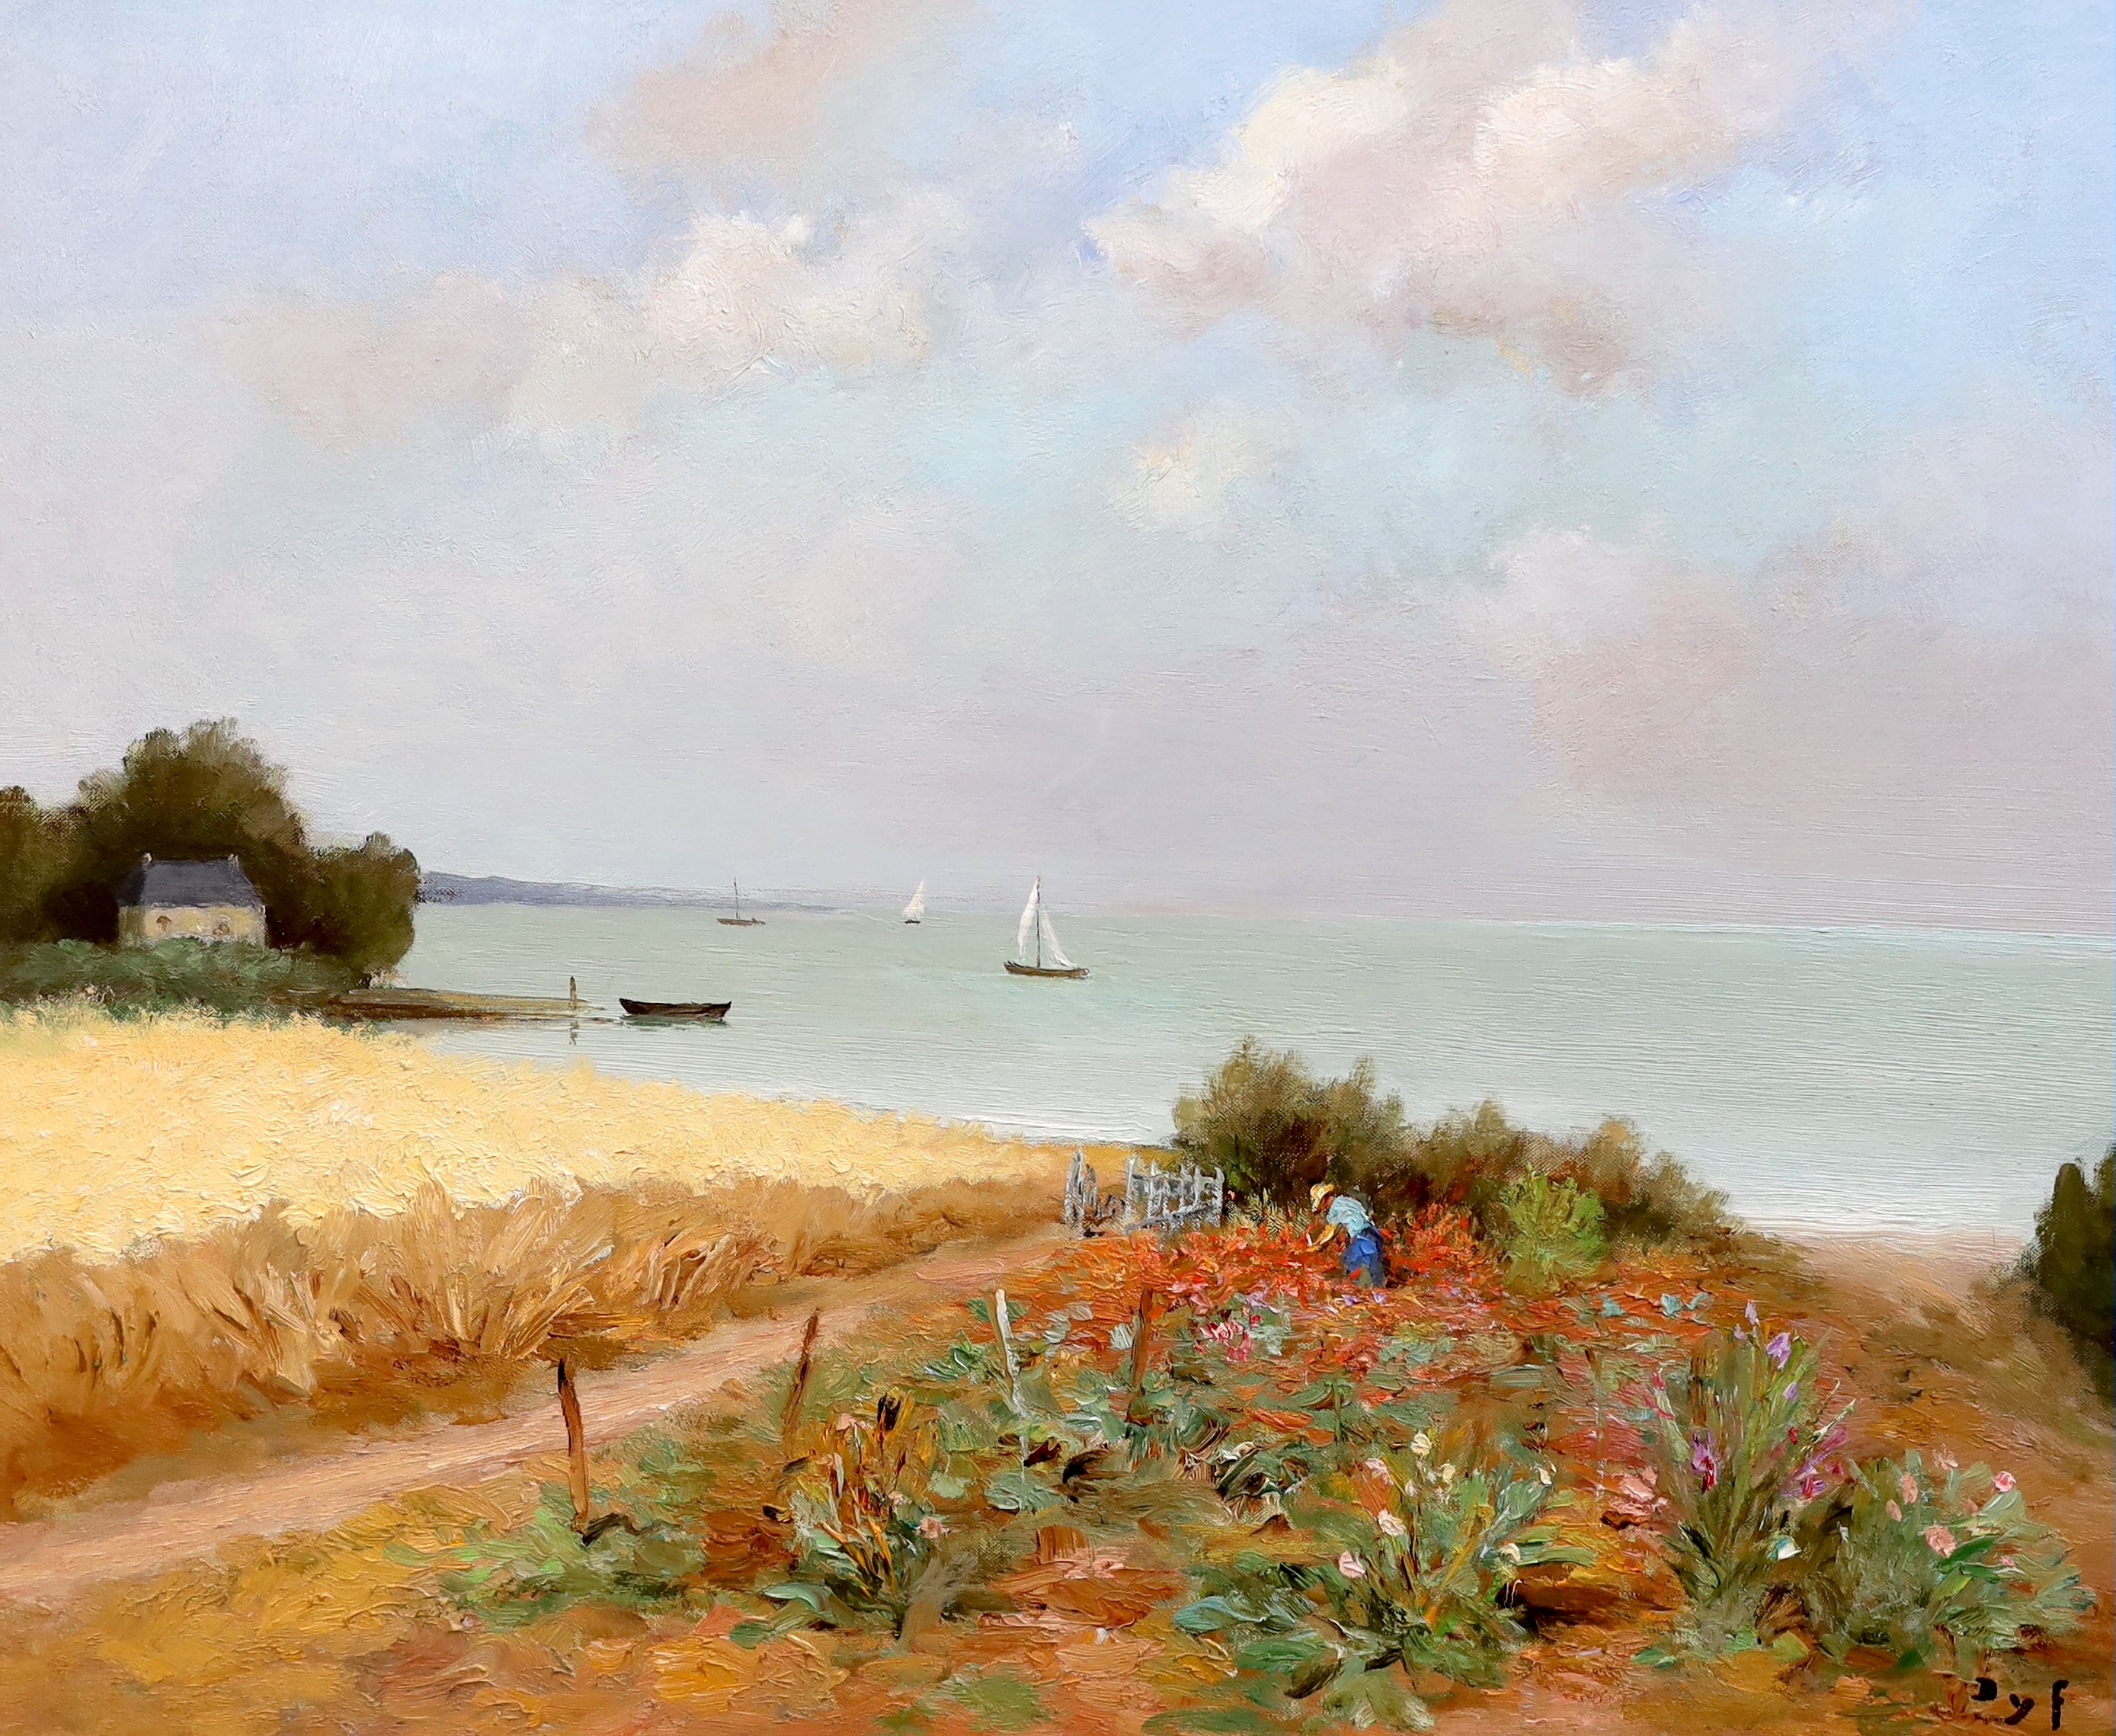 Marcel Dyf (French, 1899-1985), 'Le Potager au Ruault', oil on canvas, 60 x 73cm